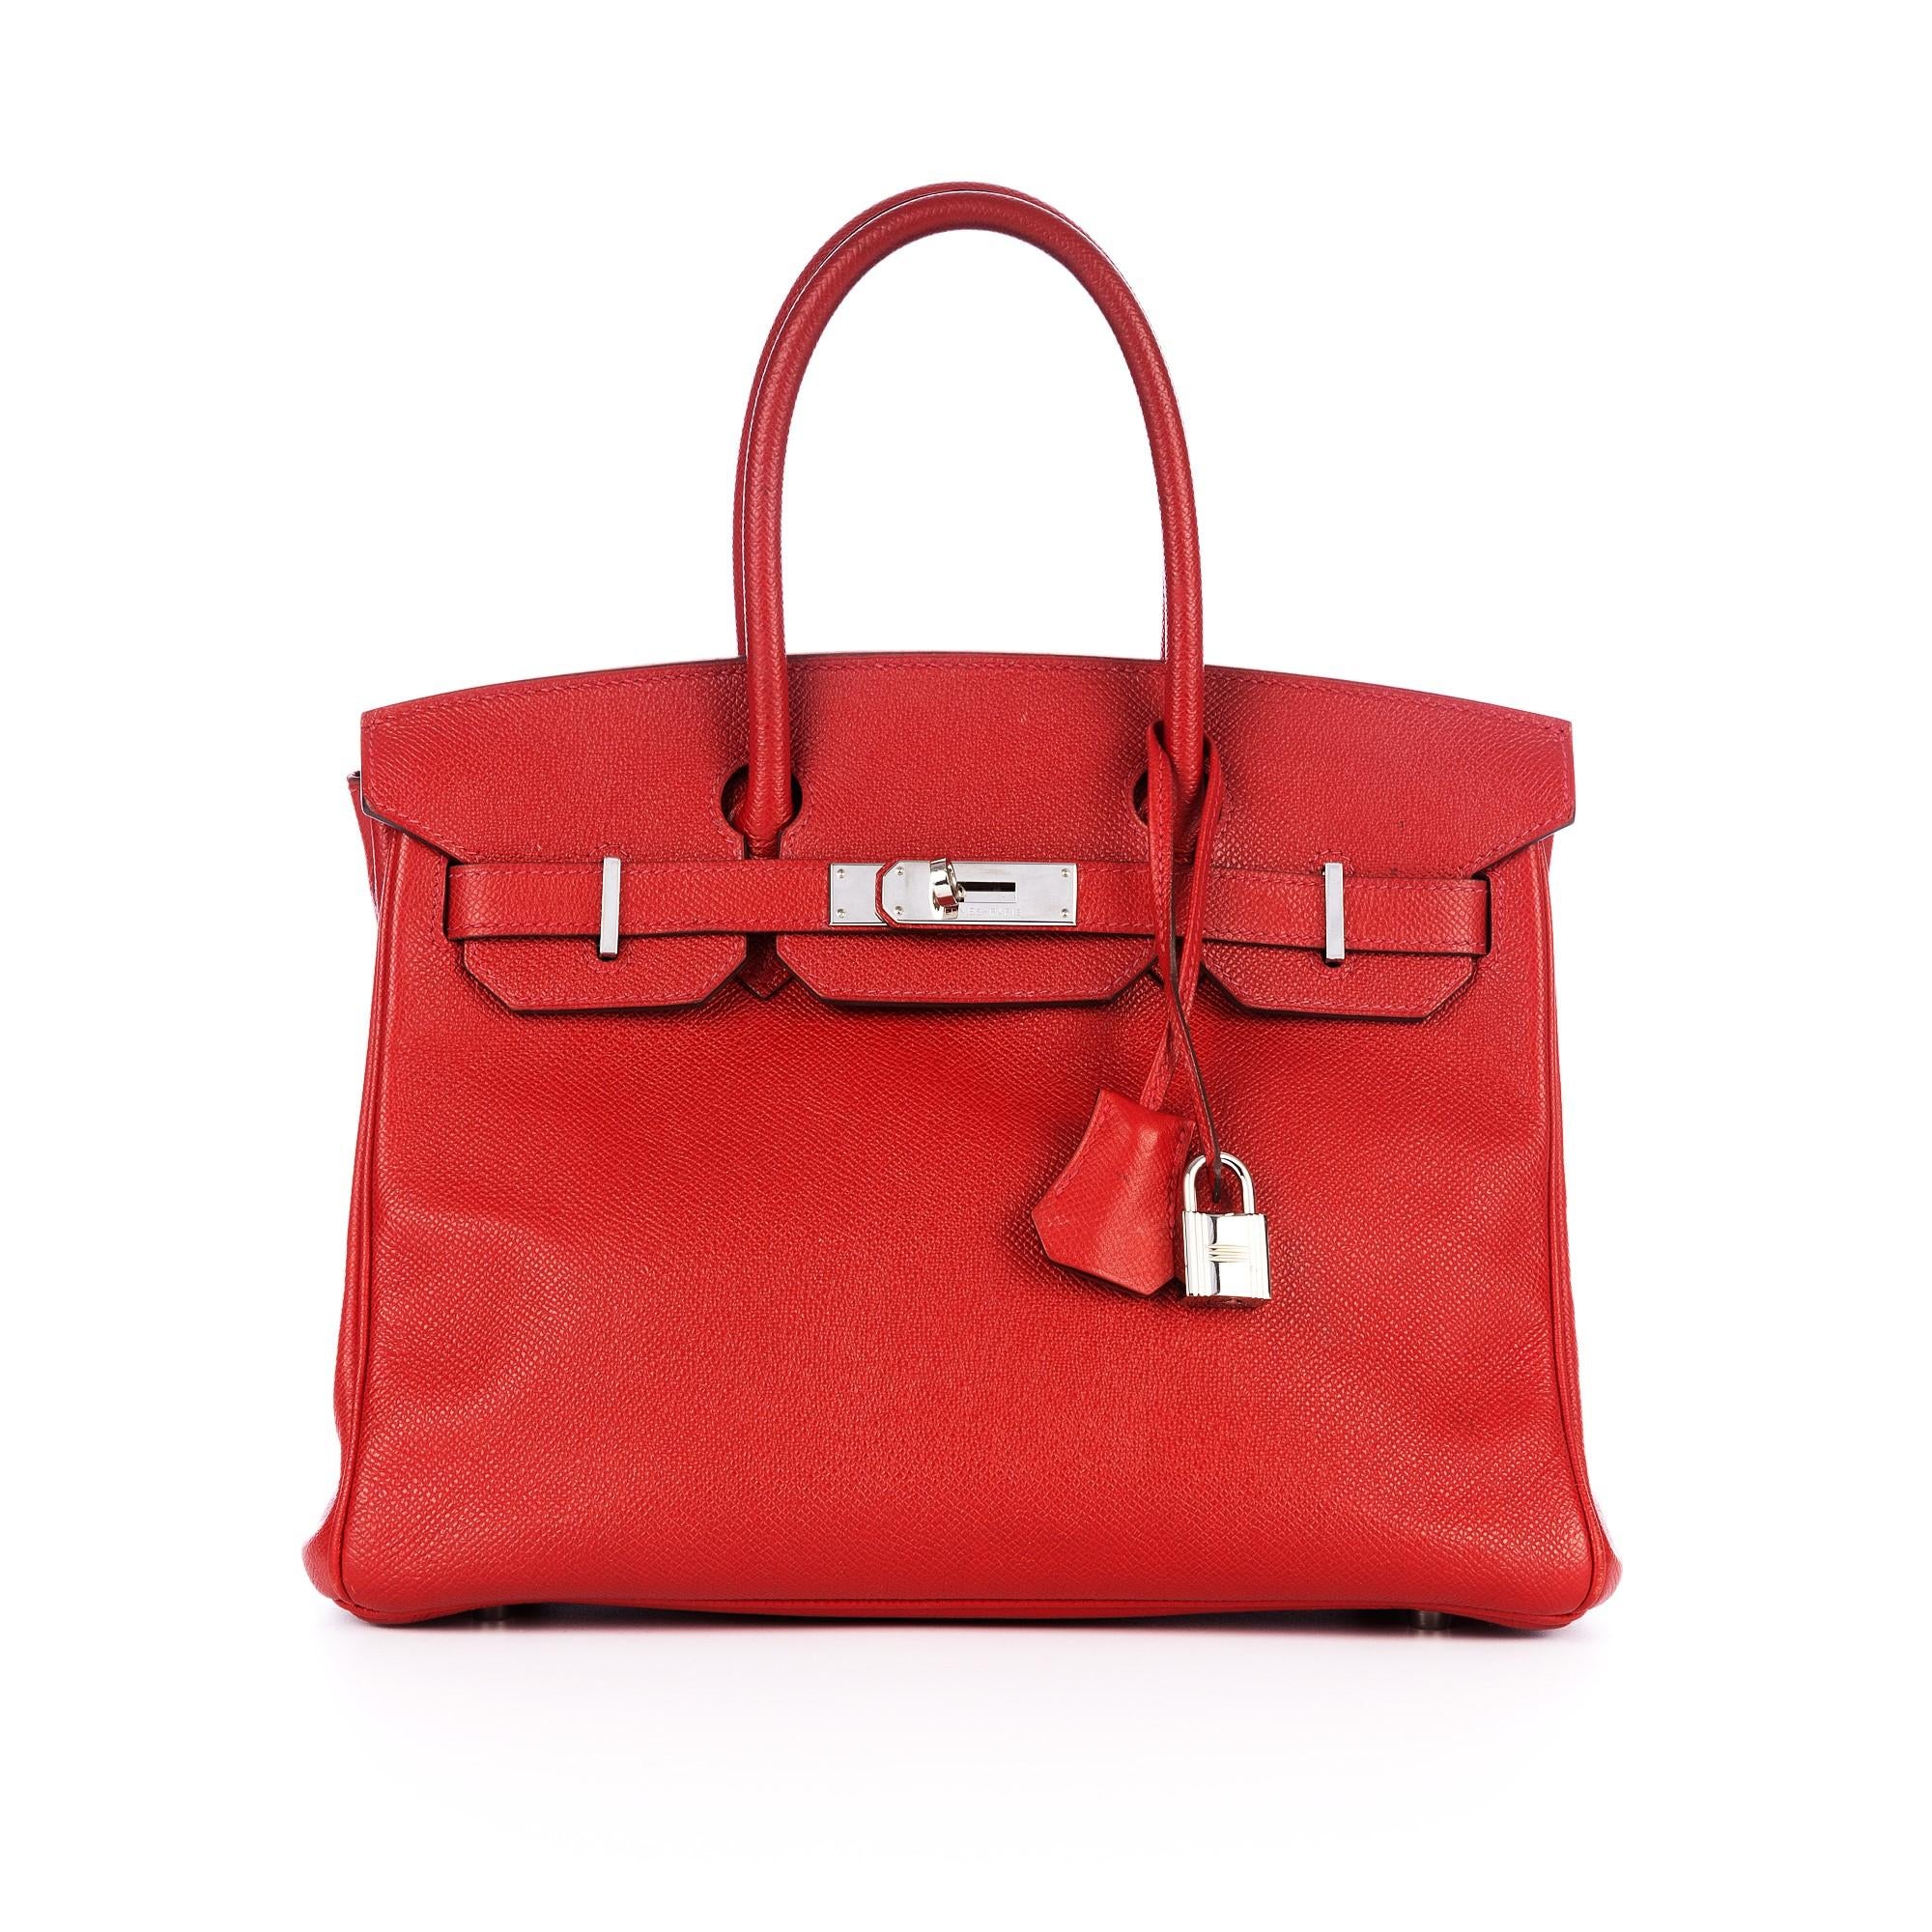 Hermès 2014 pre-owned Birkin 35 handbag - Blue